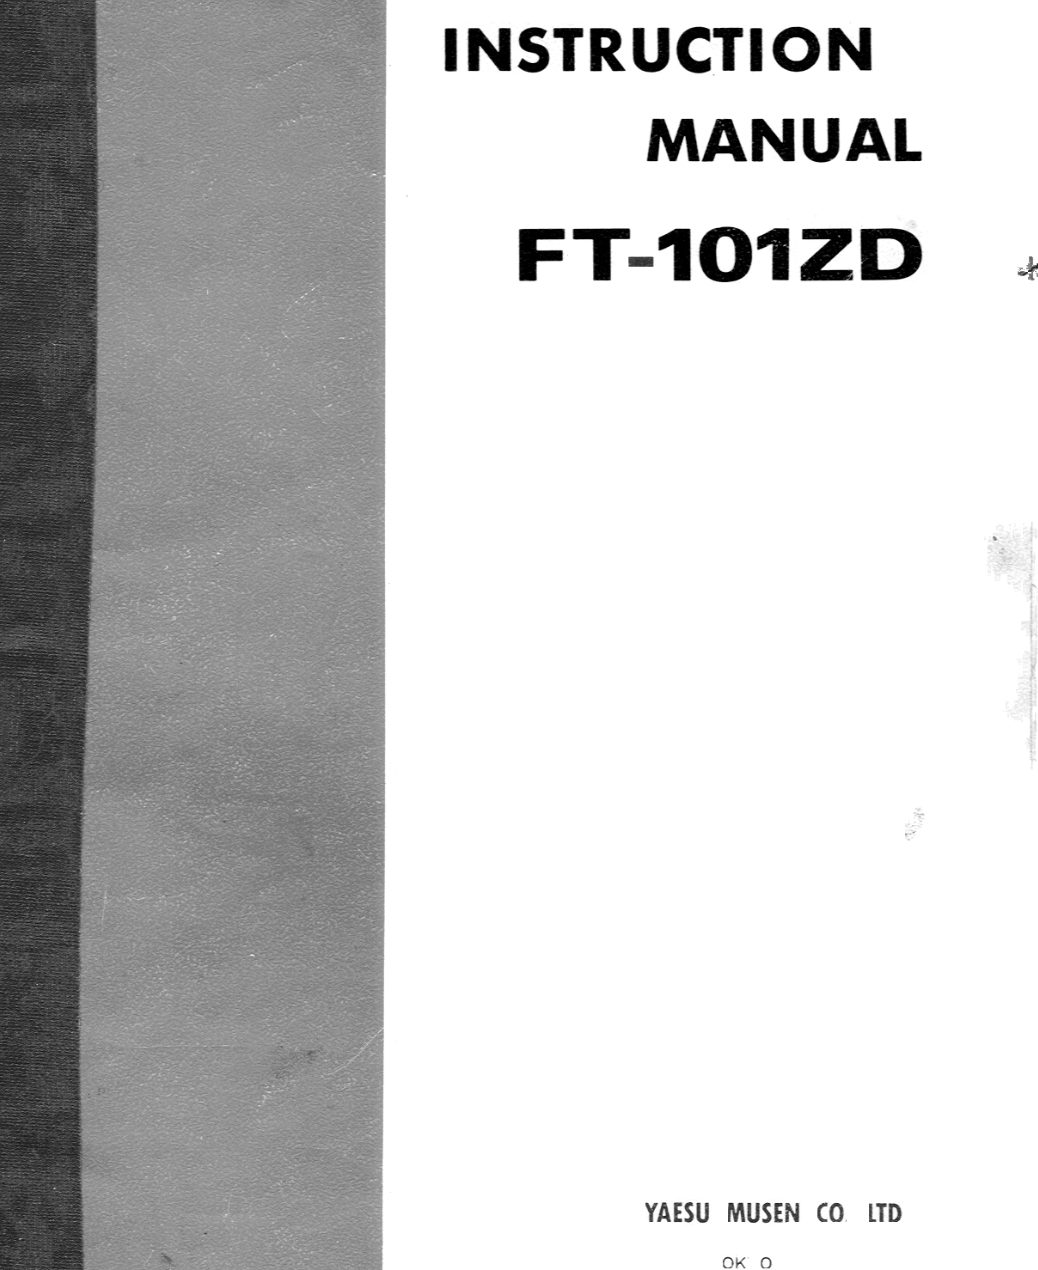 Yaesu FT-101ZD Mark 3 - Instruction Manual